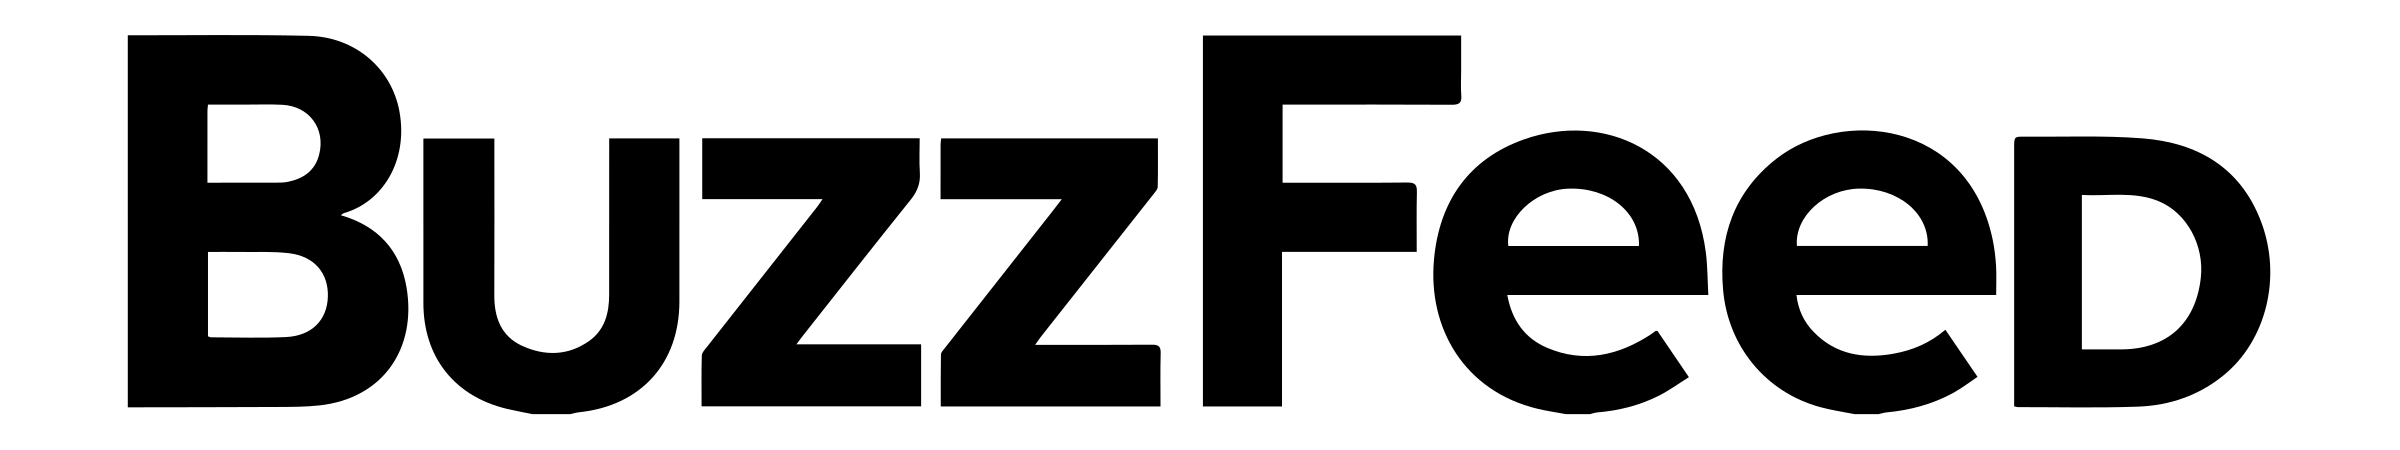 buzzfeed logo black transparent